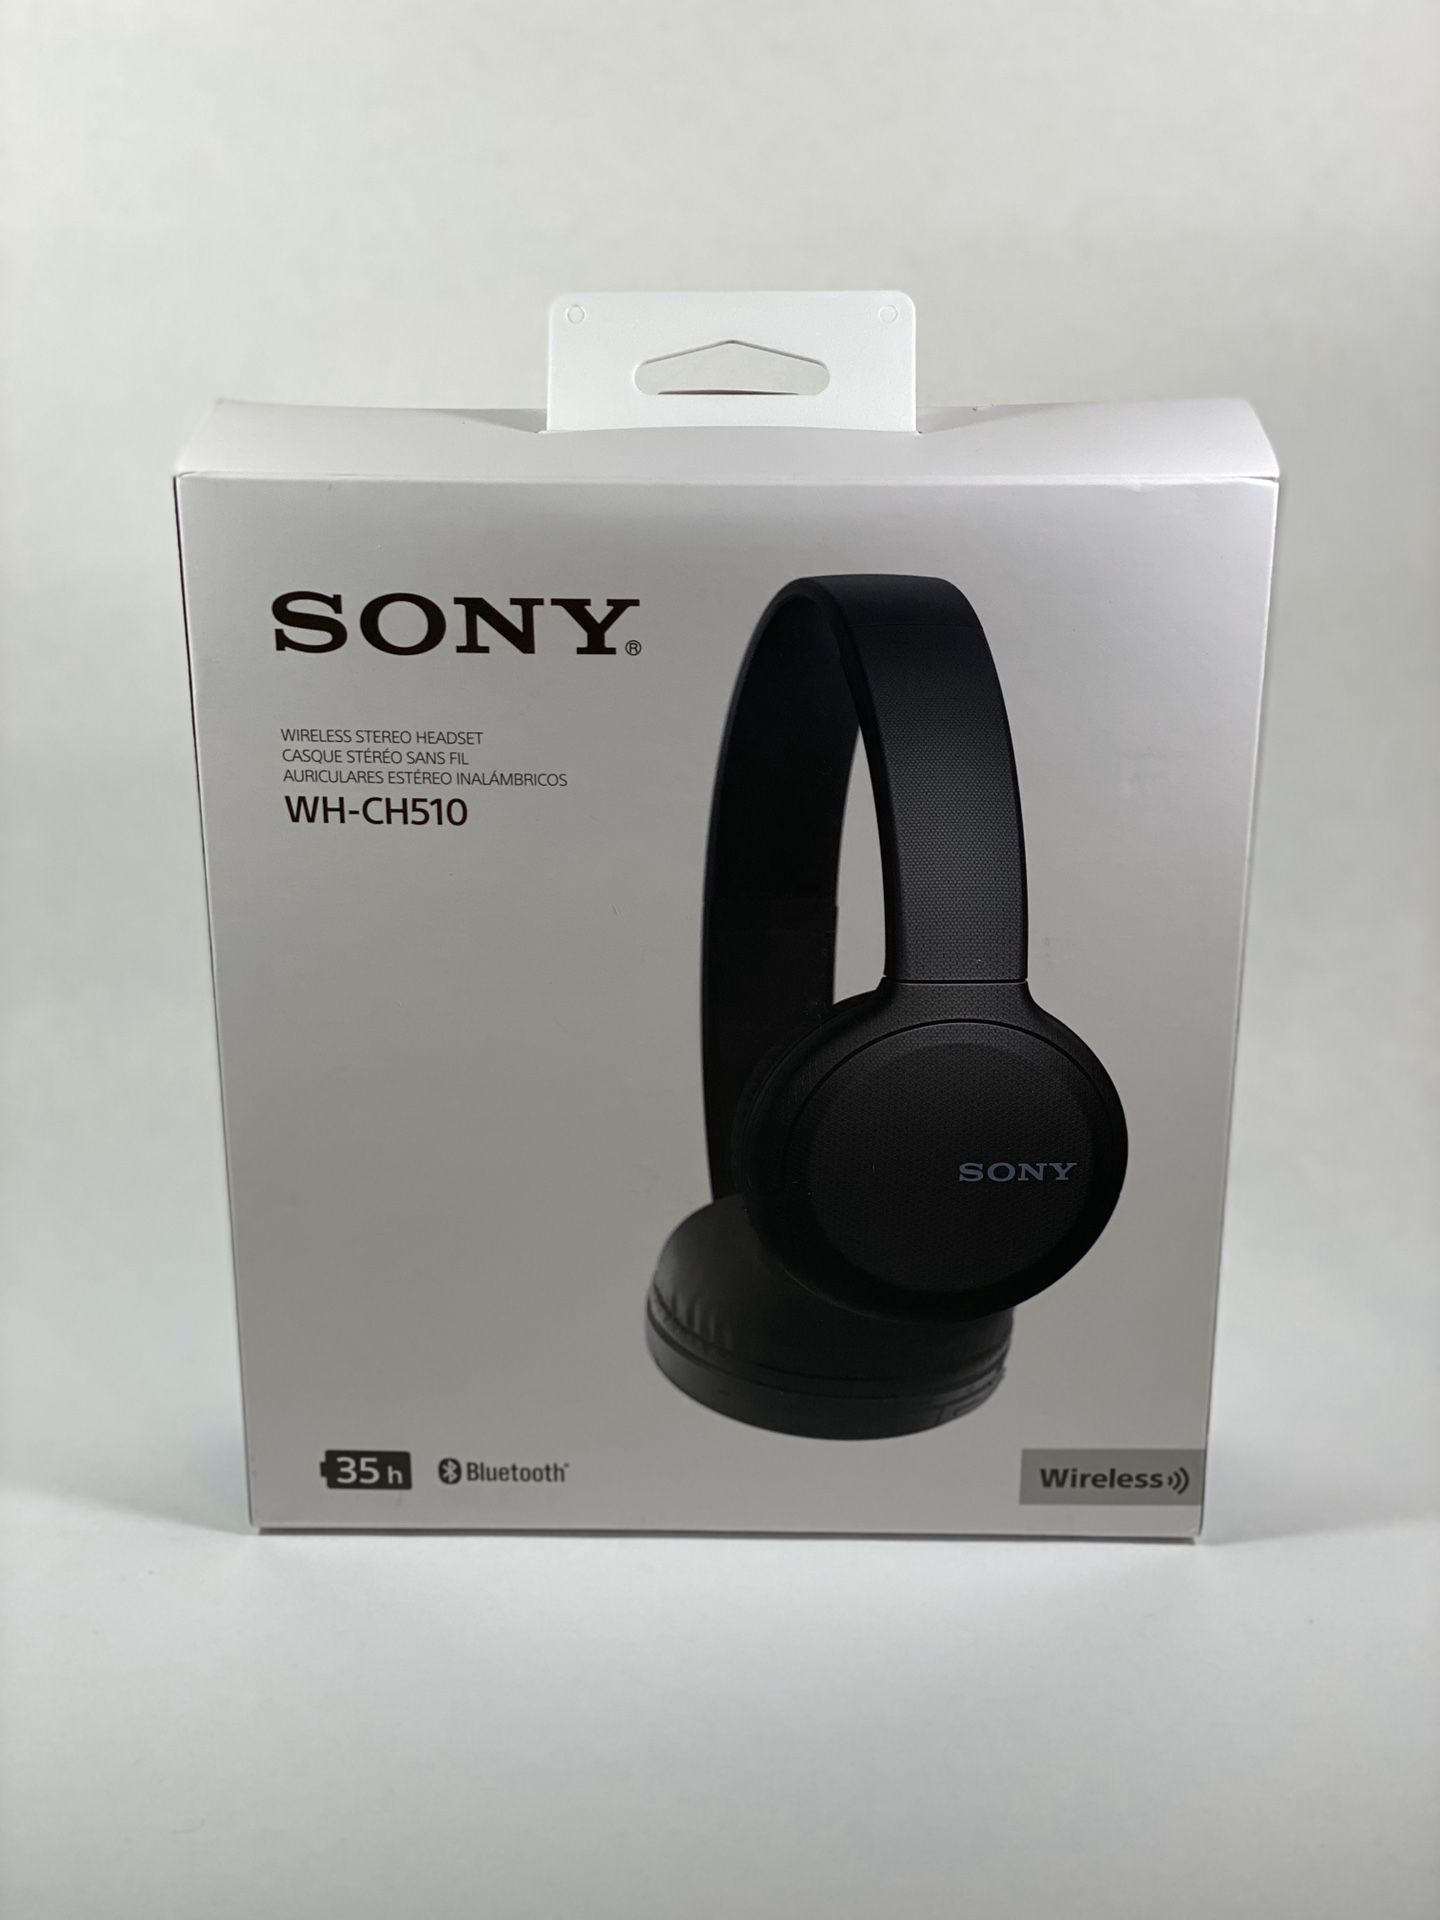 Sony WH-CH510 Wireless Bluetooth Headphones - Black New (Open Box)